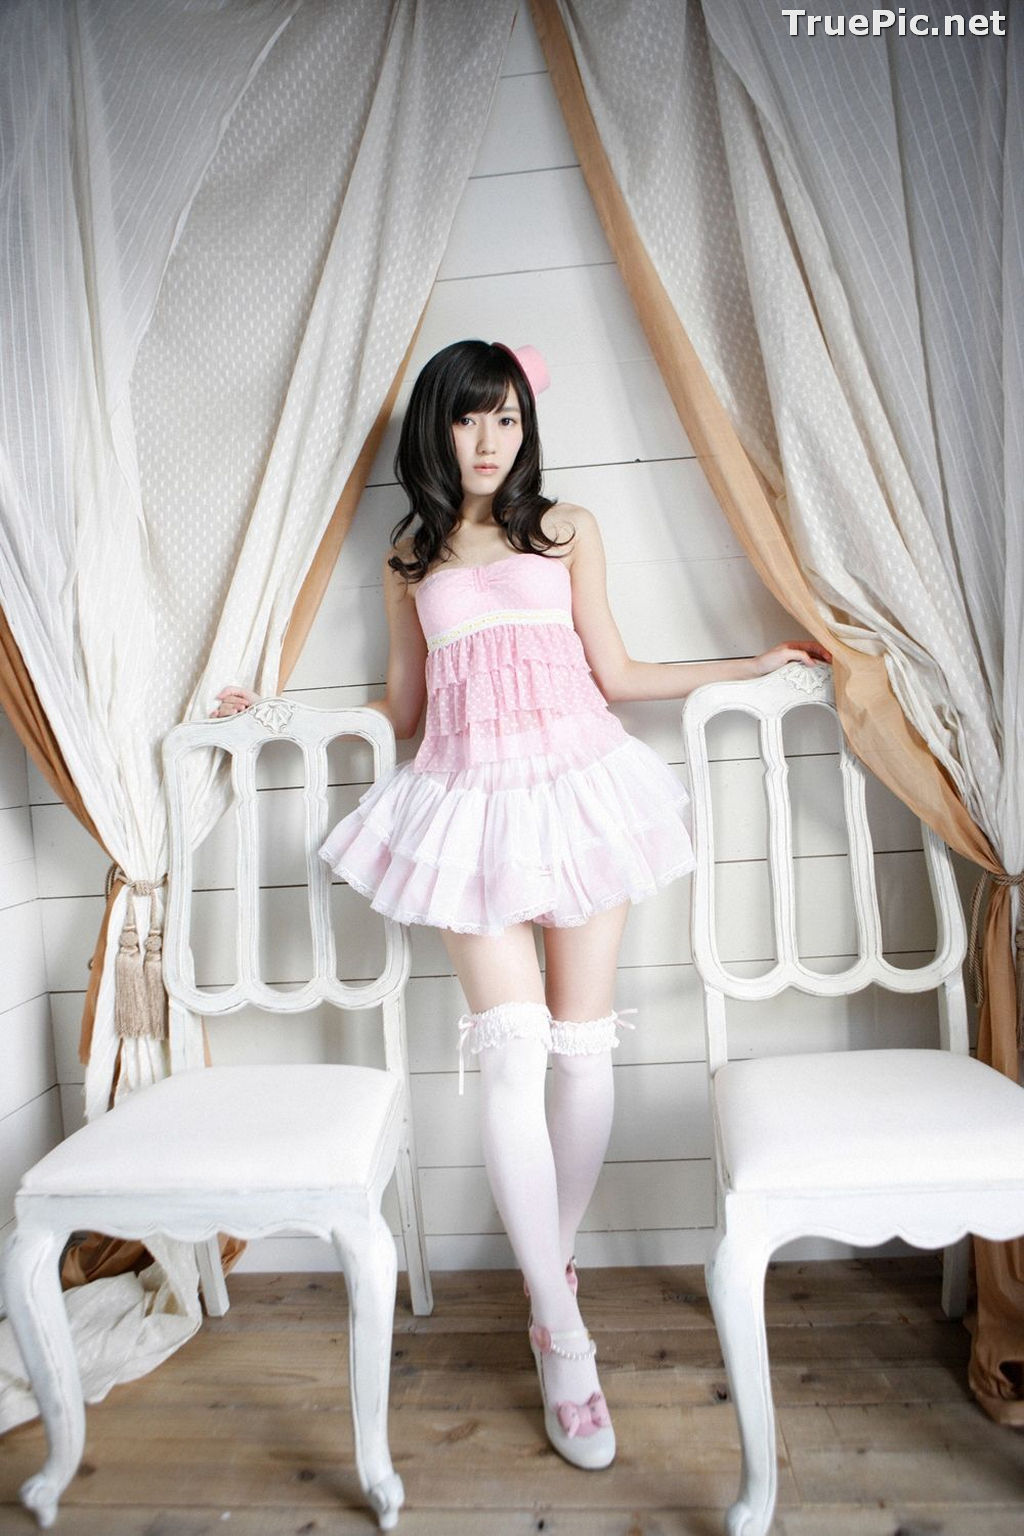 Image [YS Web] Vol.531 - Japanese Idol Girl Group (AKB48) - Mayu Watanabe - TruePic.net - Picture-15